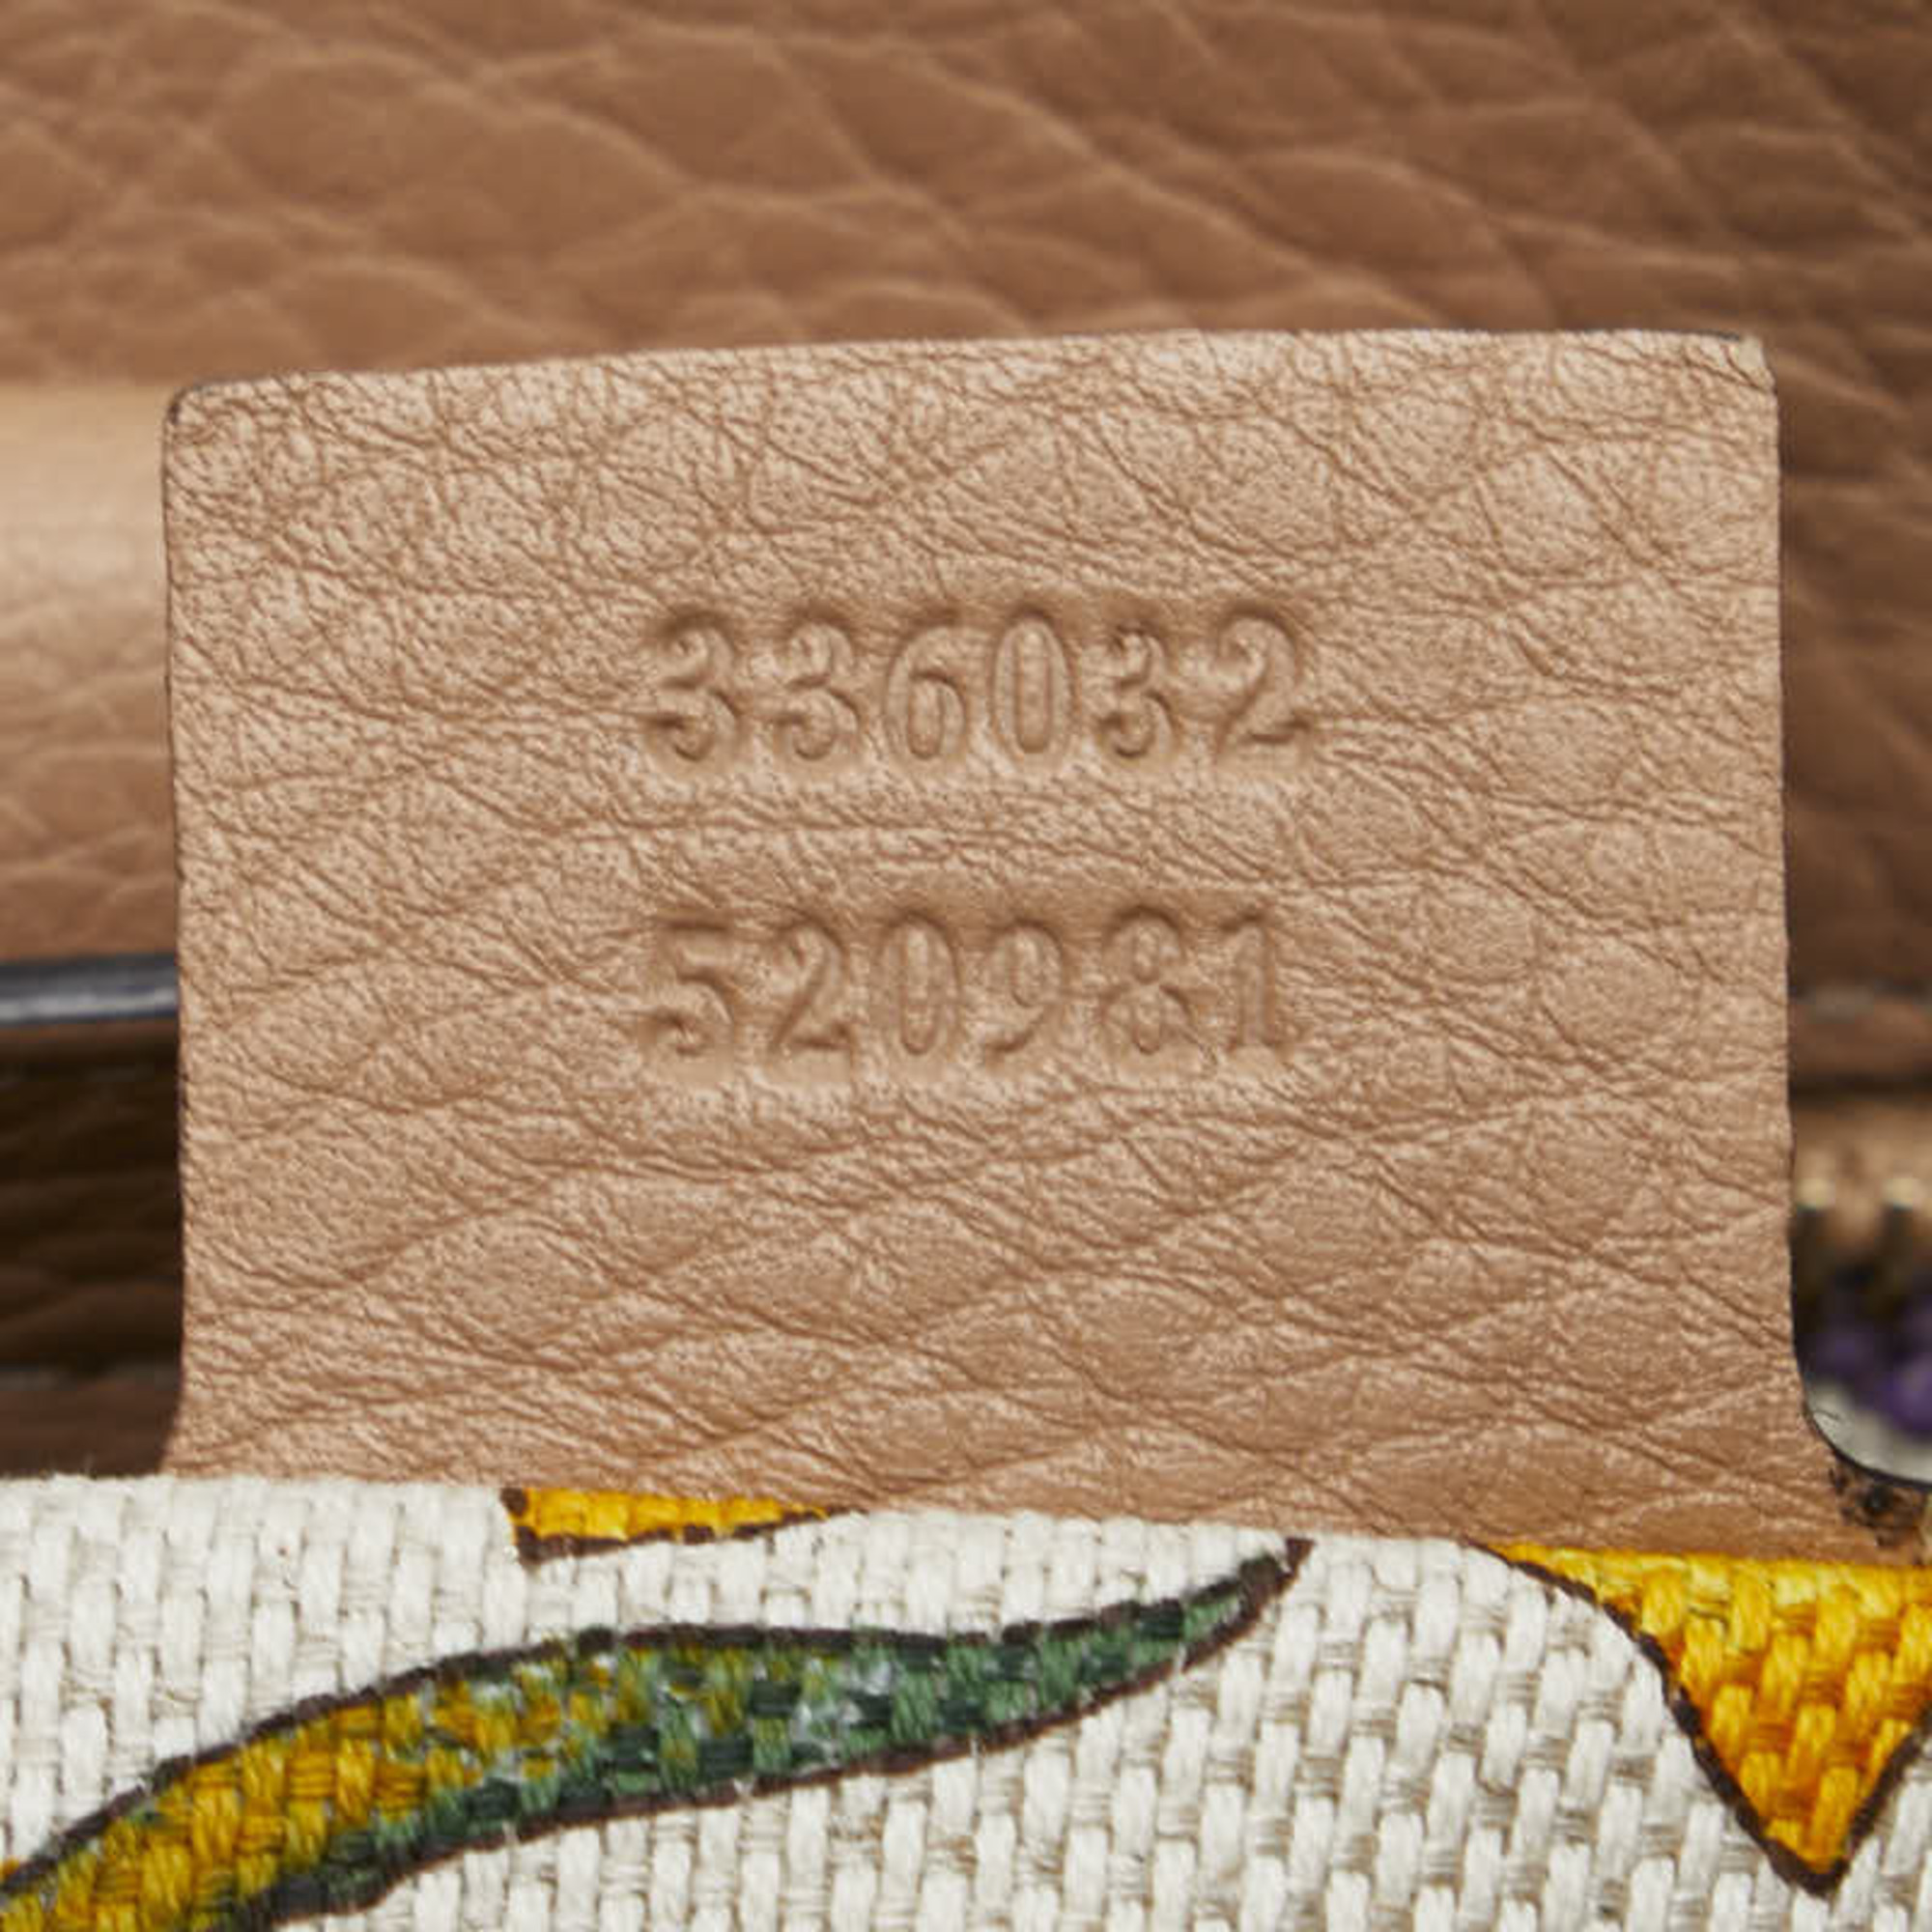 Gucci Bamboo Shopper Small Handbag Shoulder Bag 336032 Pink Leather Women's GUCCI